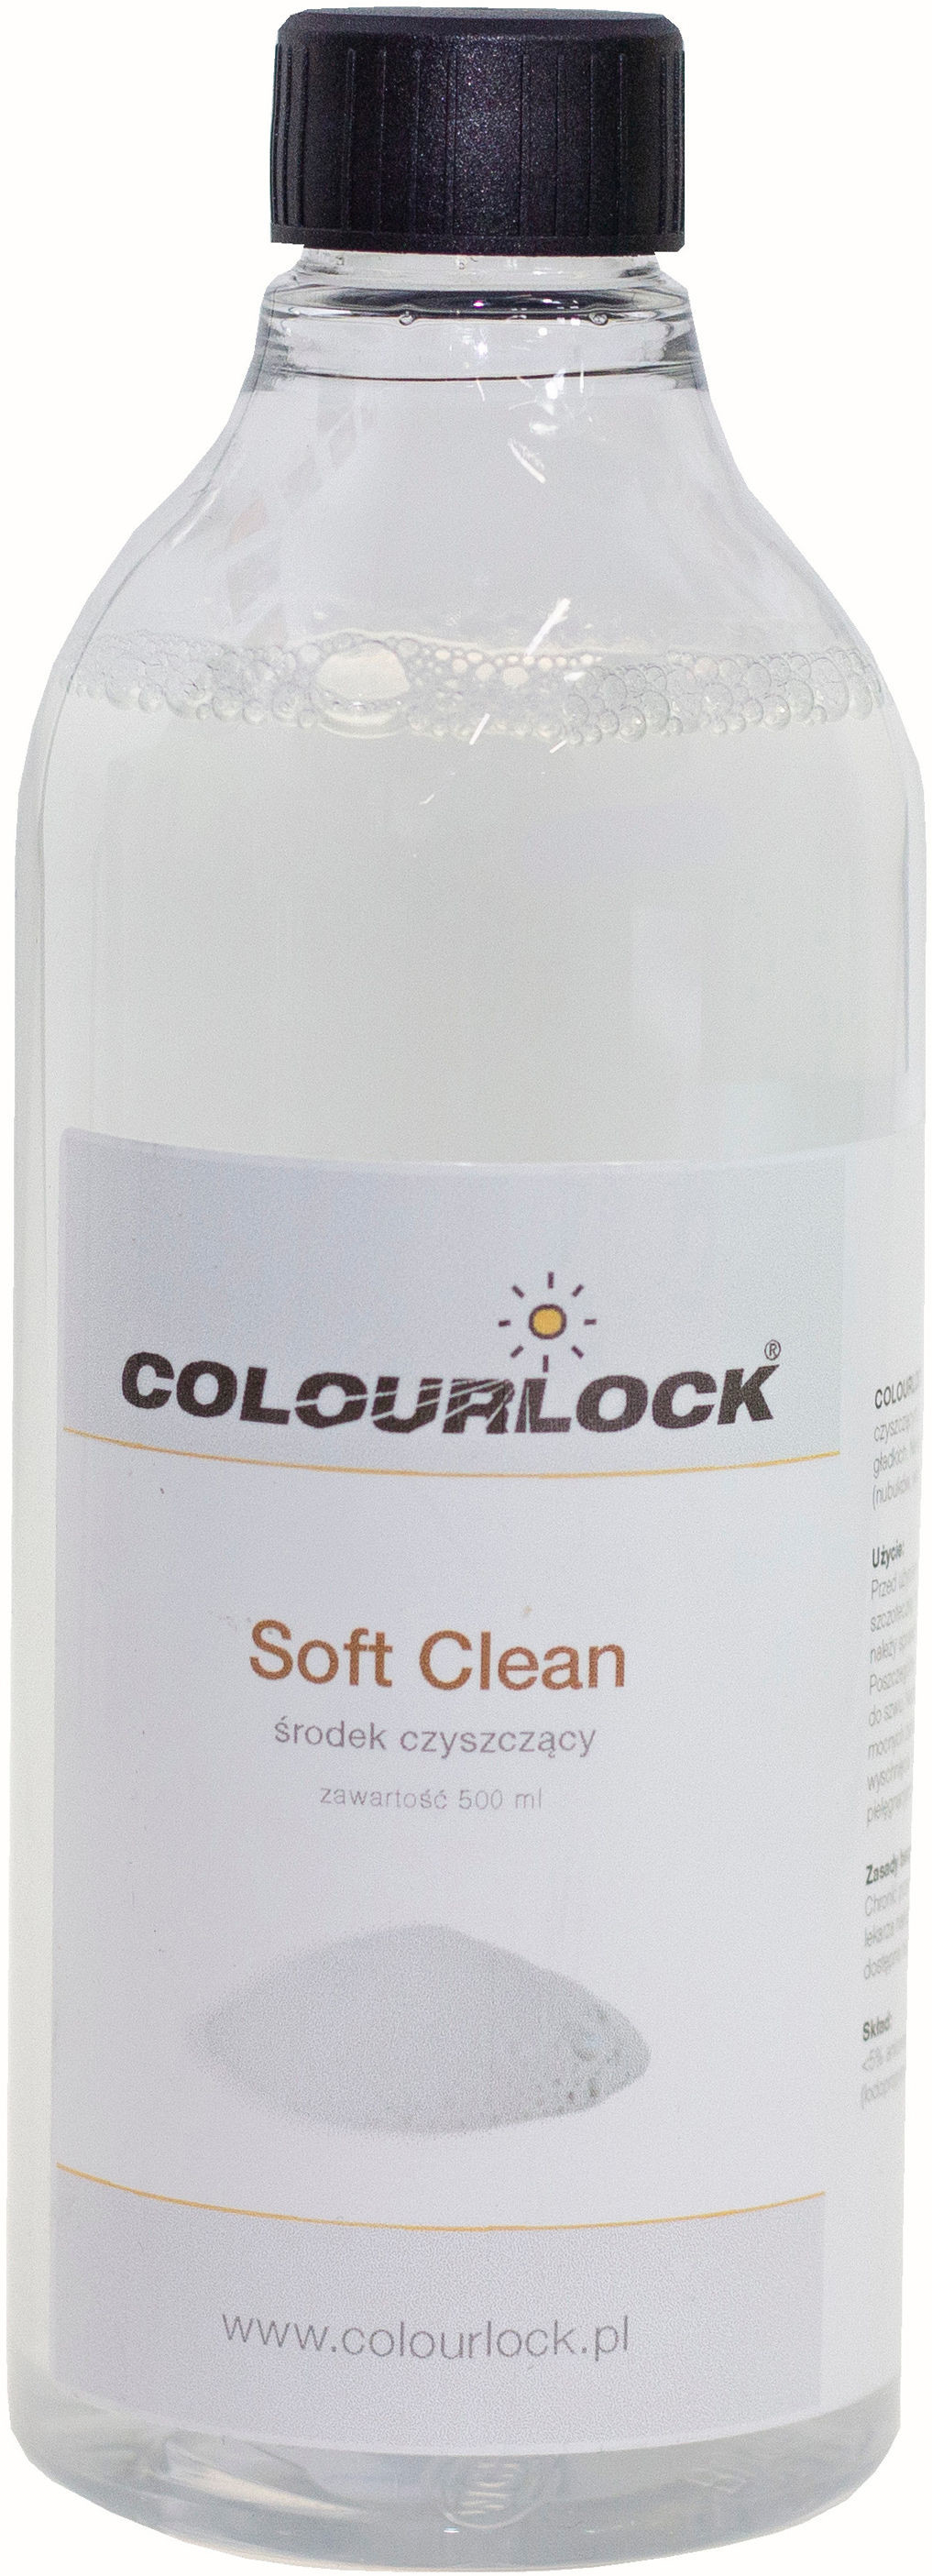 COLOURLOCK lederzentrum Cleaner Soft produkt do regularnego czyszczenia skóry 500ml COL000100